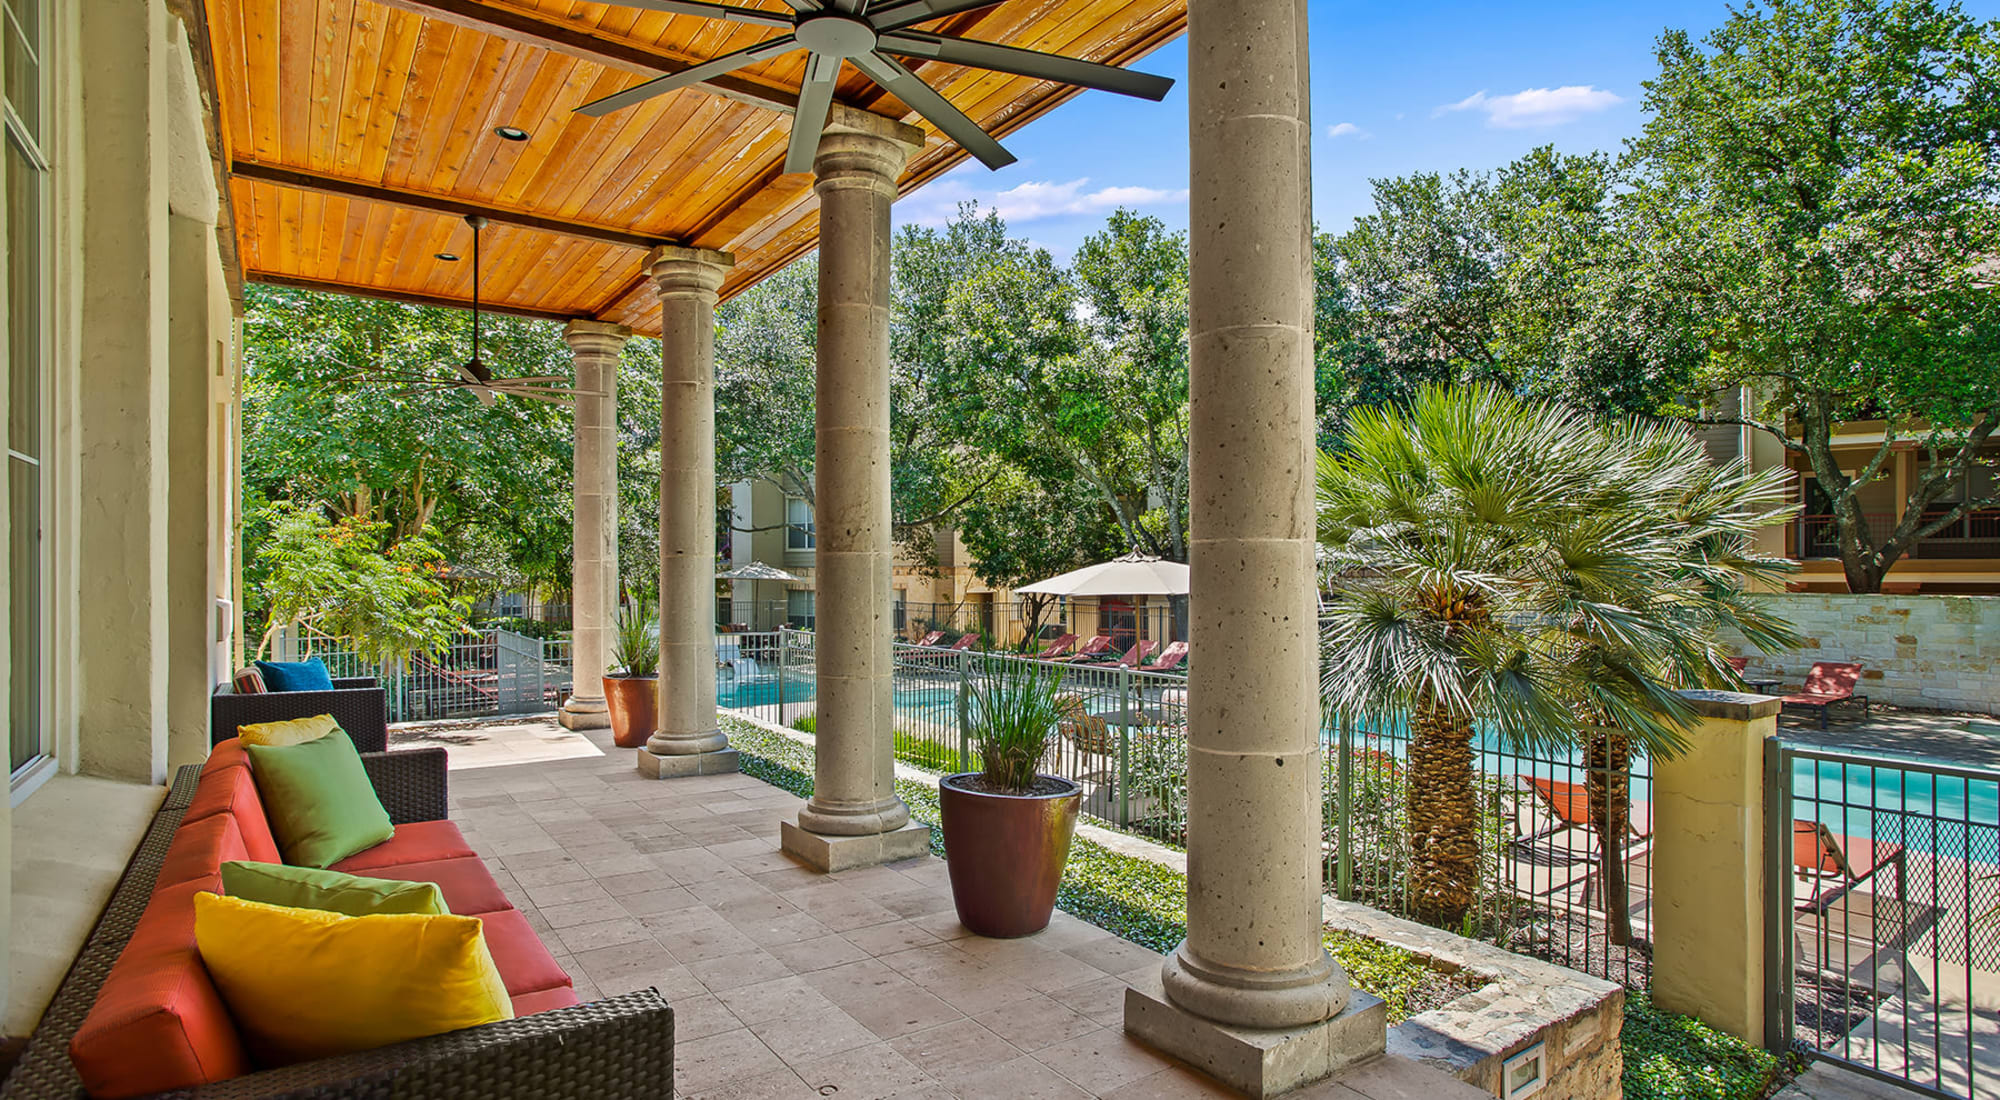 Lounge area next to the pool at Sedona Ranch Apartments in San Antonio, Texas